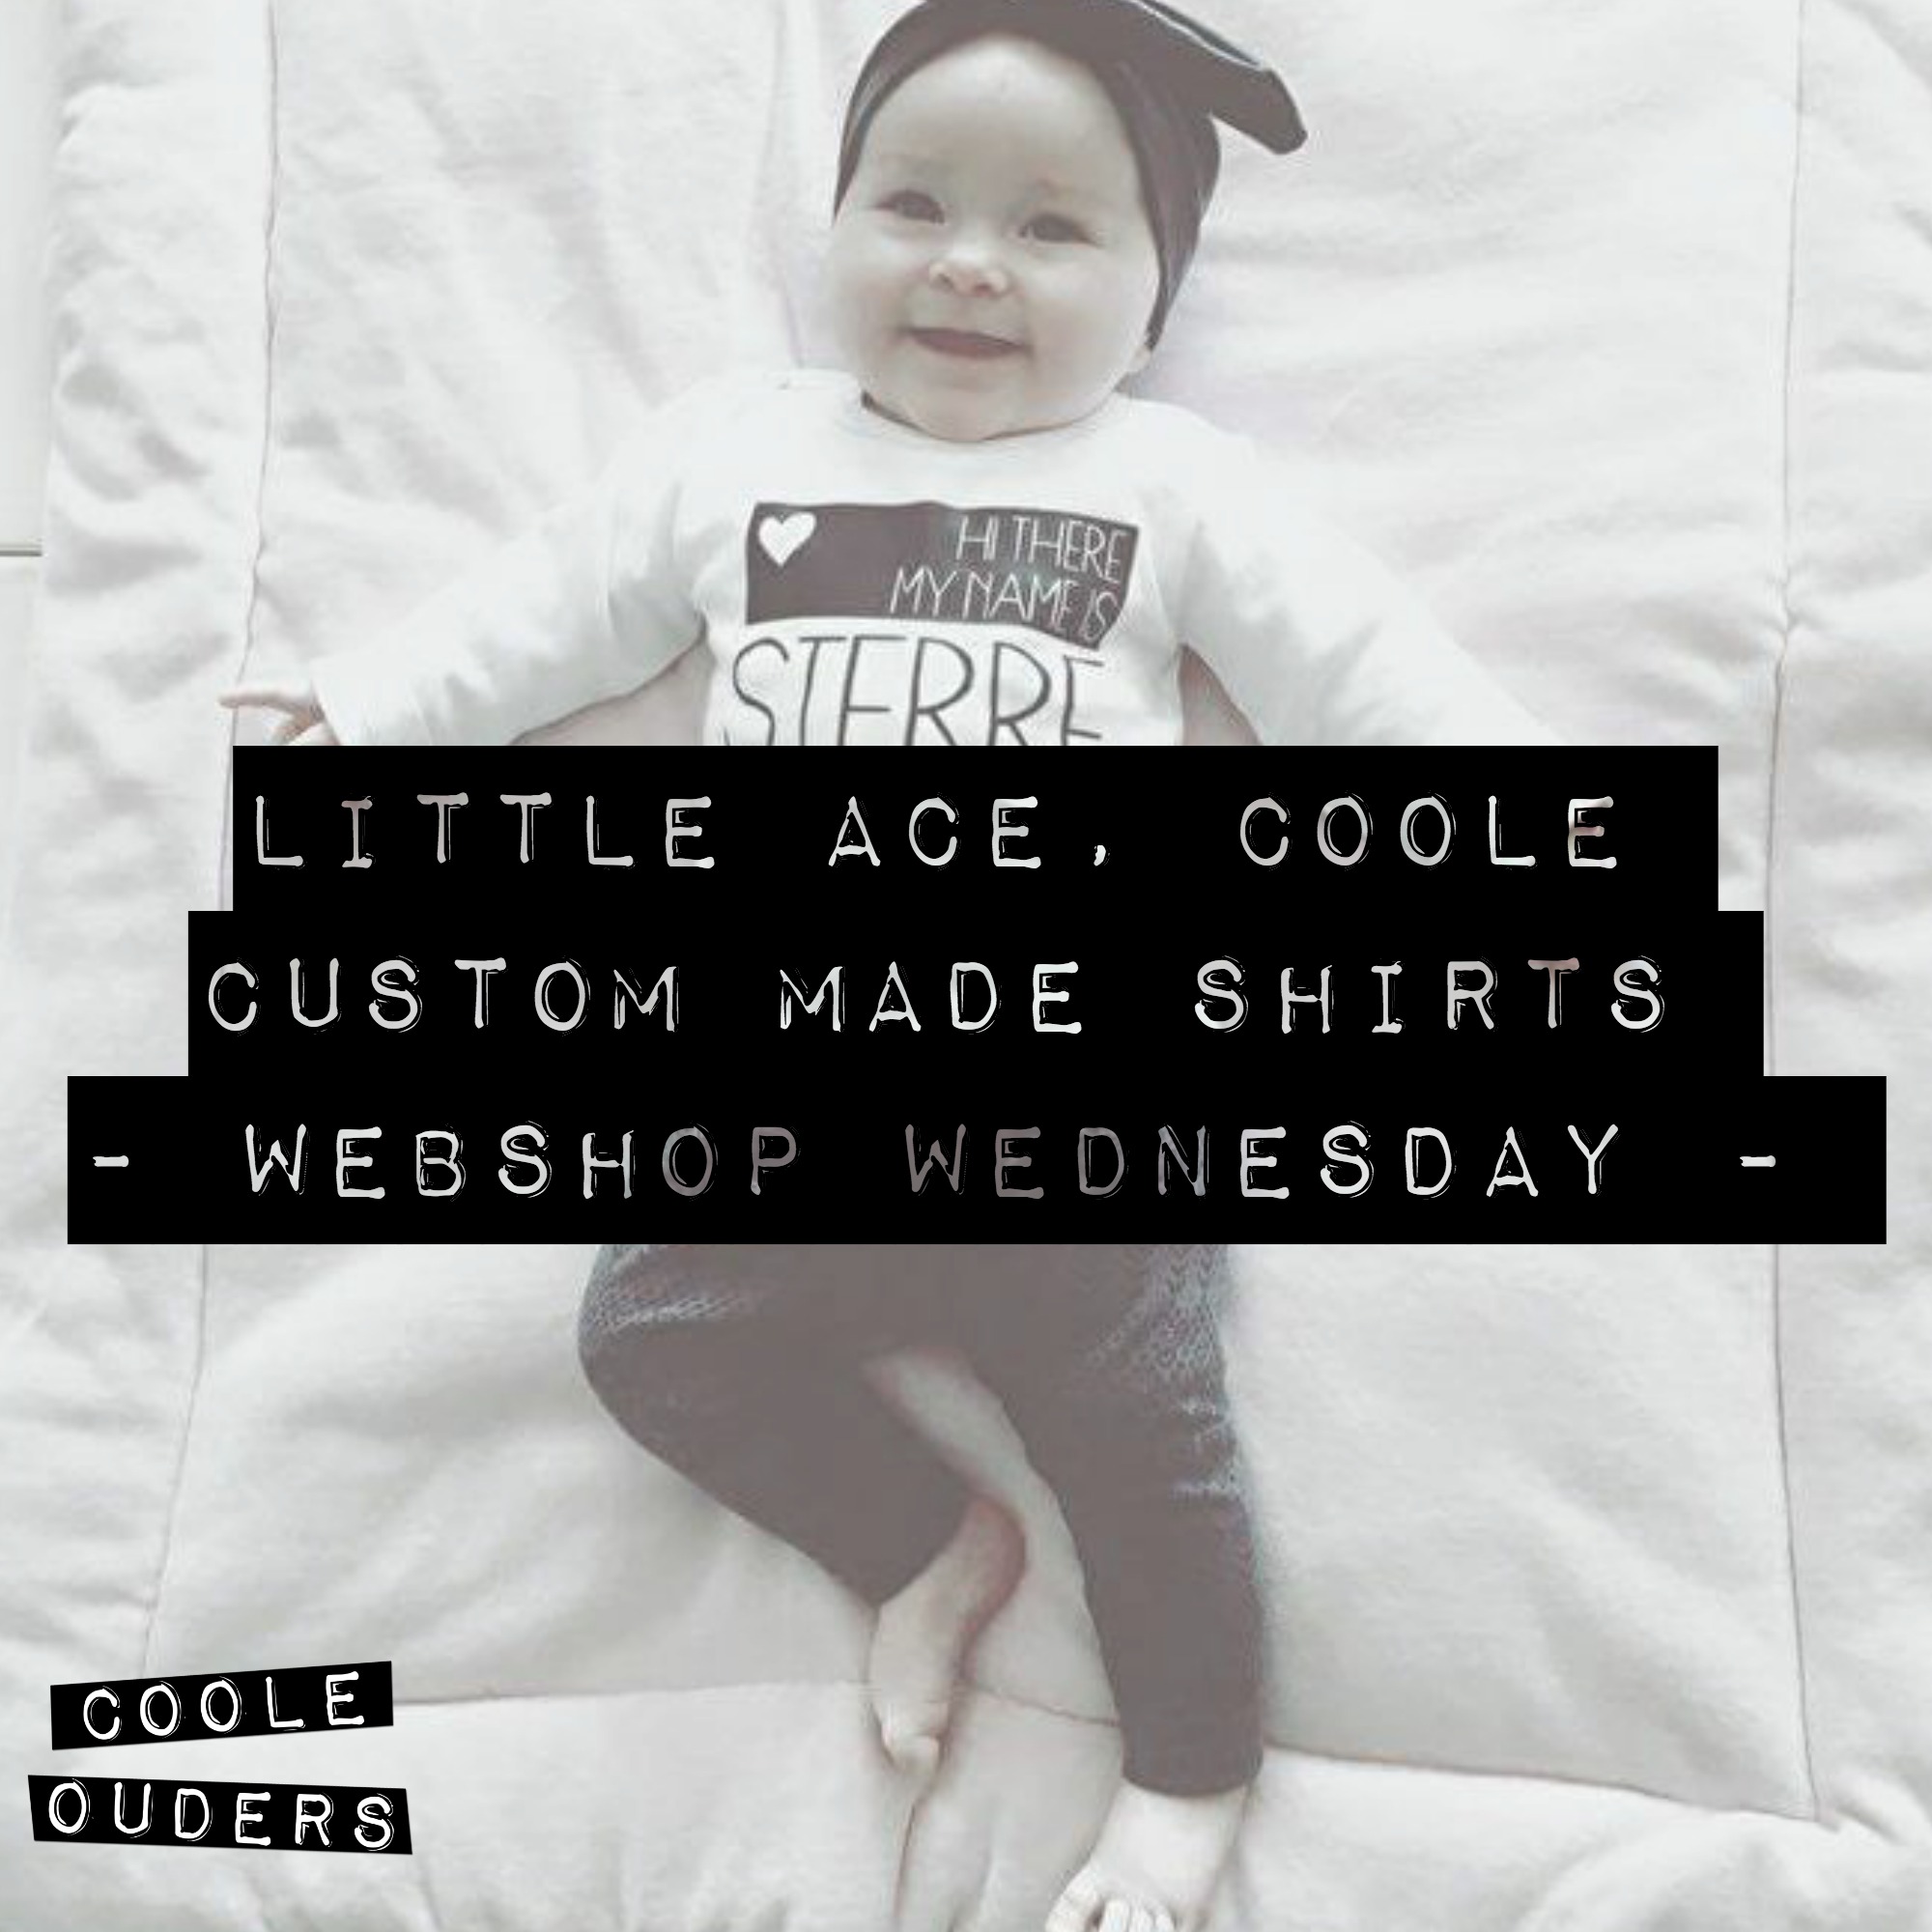 Little Ace, coole custom made shirts – Webshop Wednesday